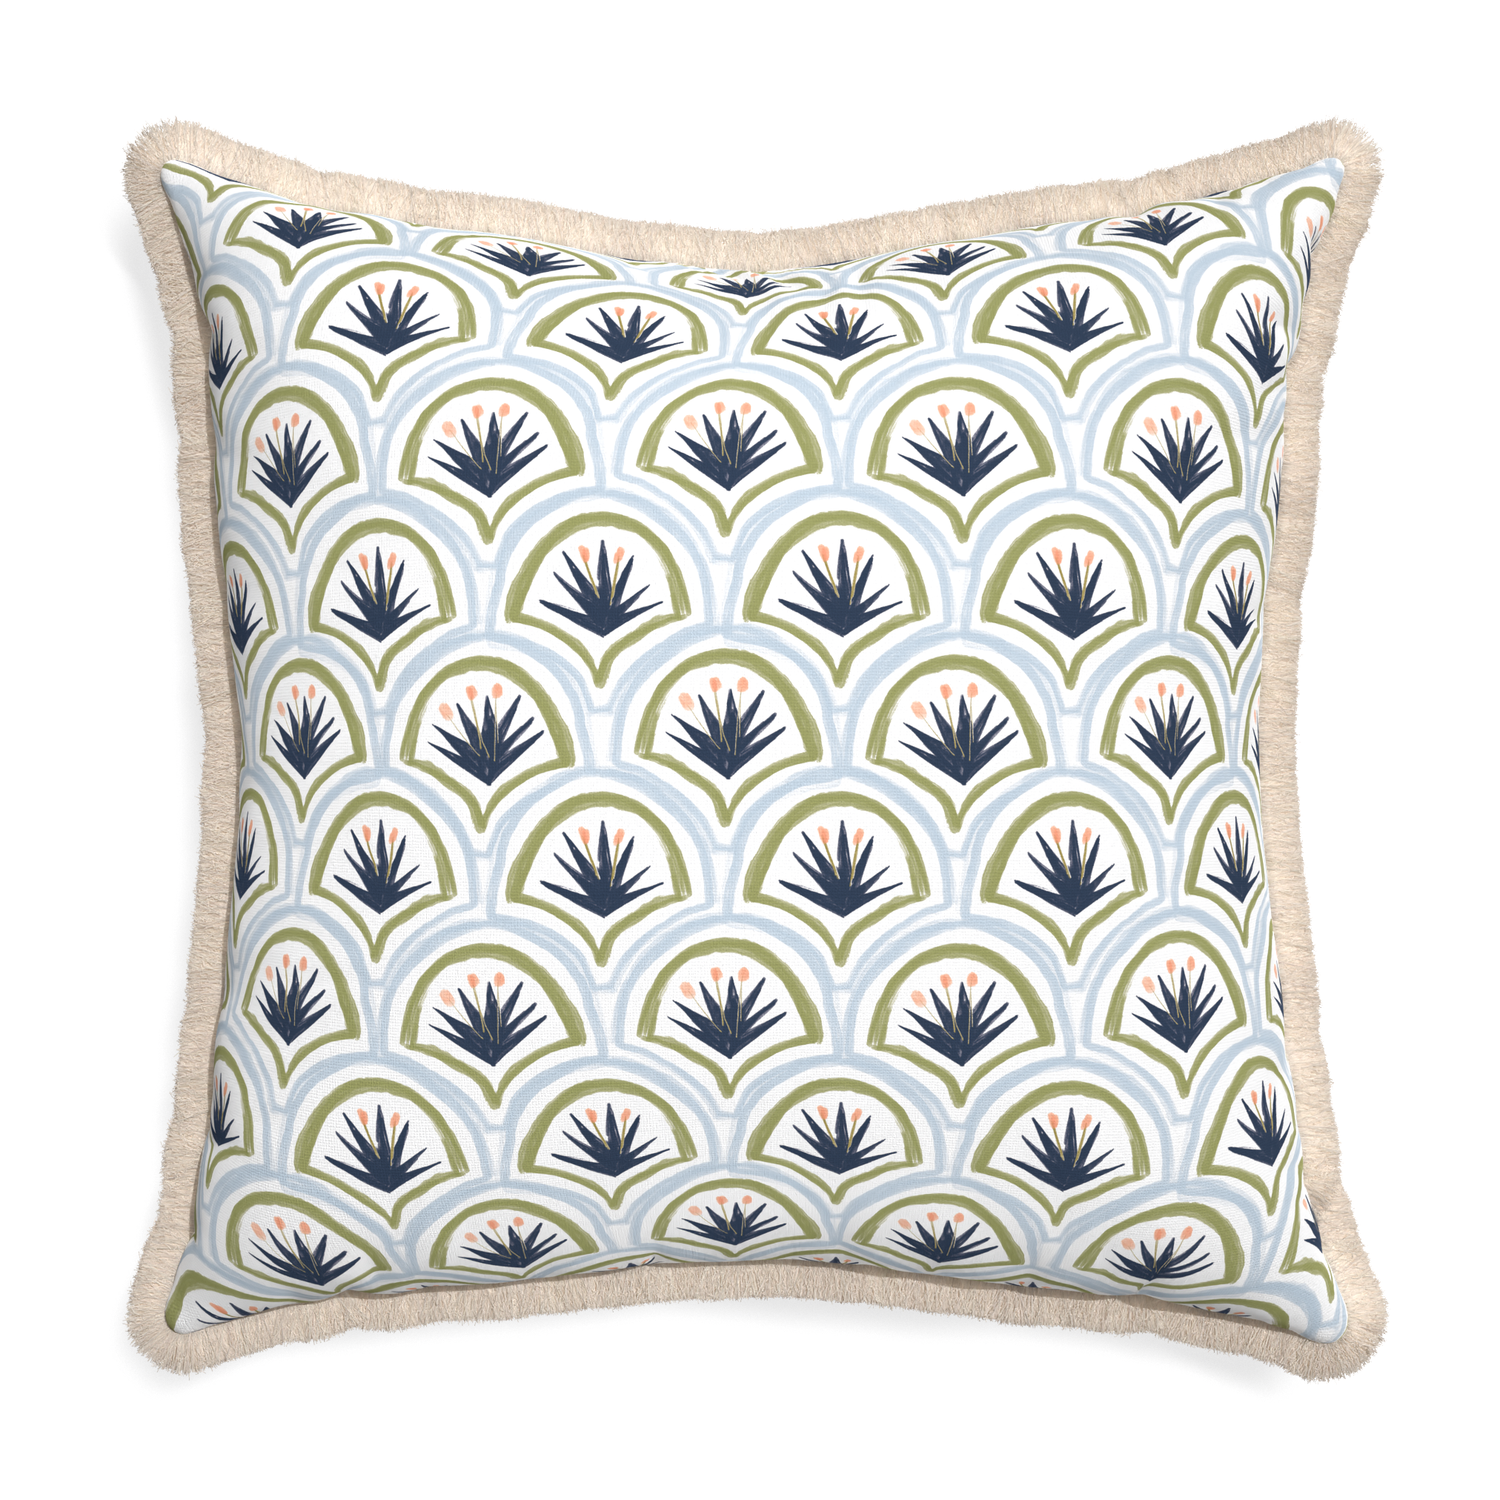 Euro-sham thatcher midnight custom art deco palm patternpillow with cream fringe on white background